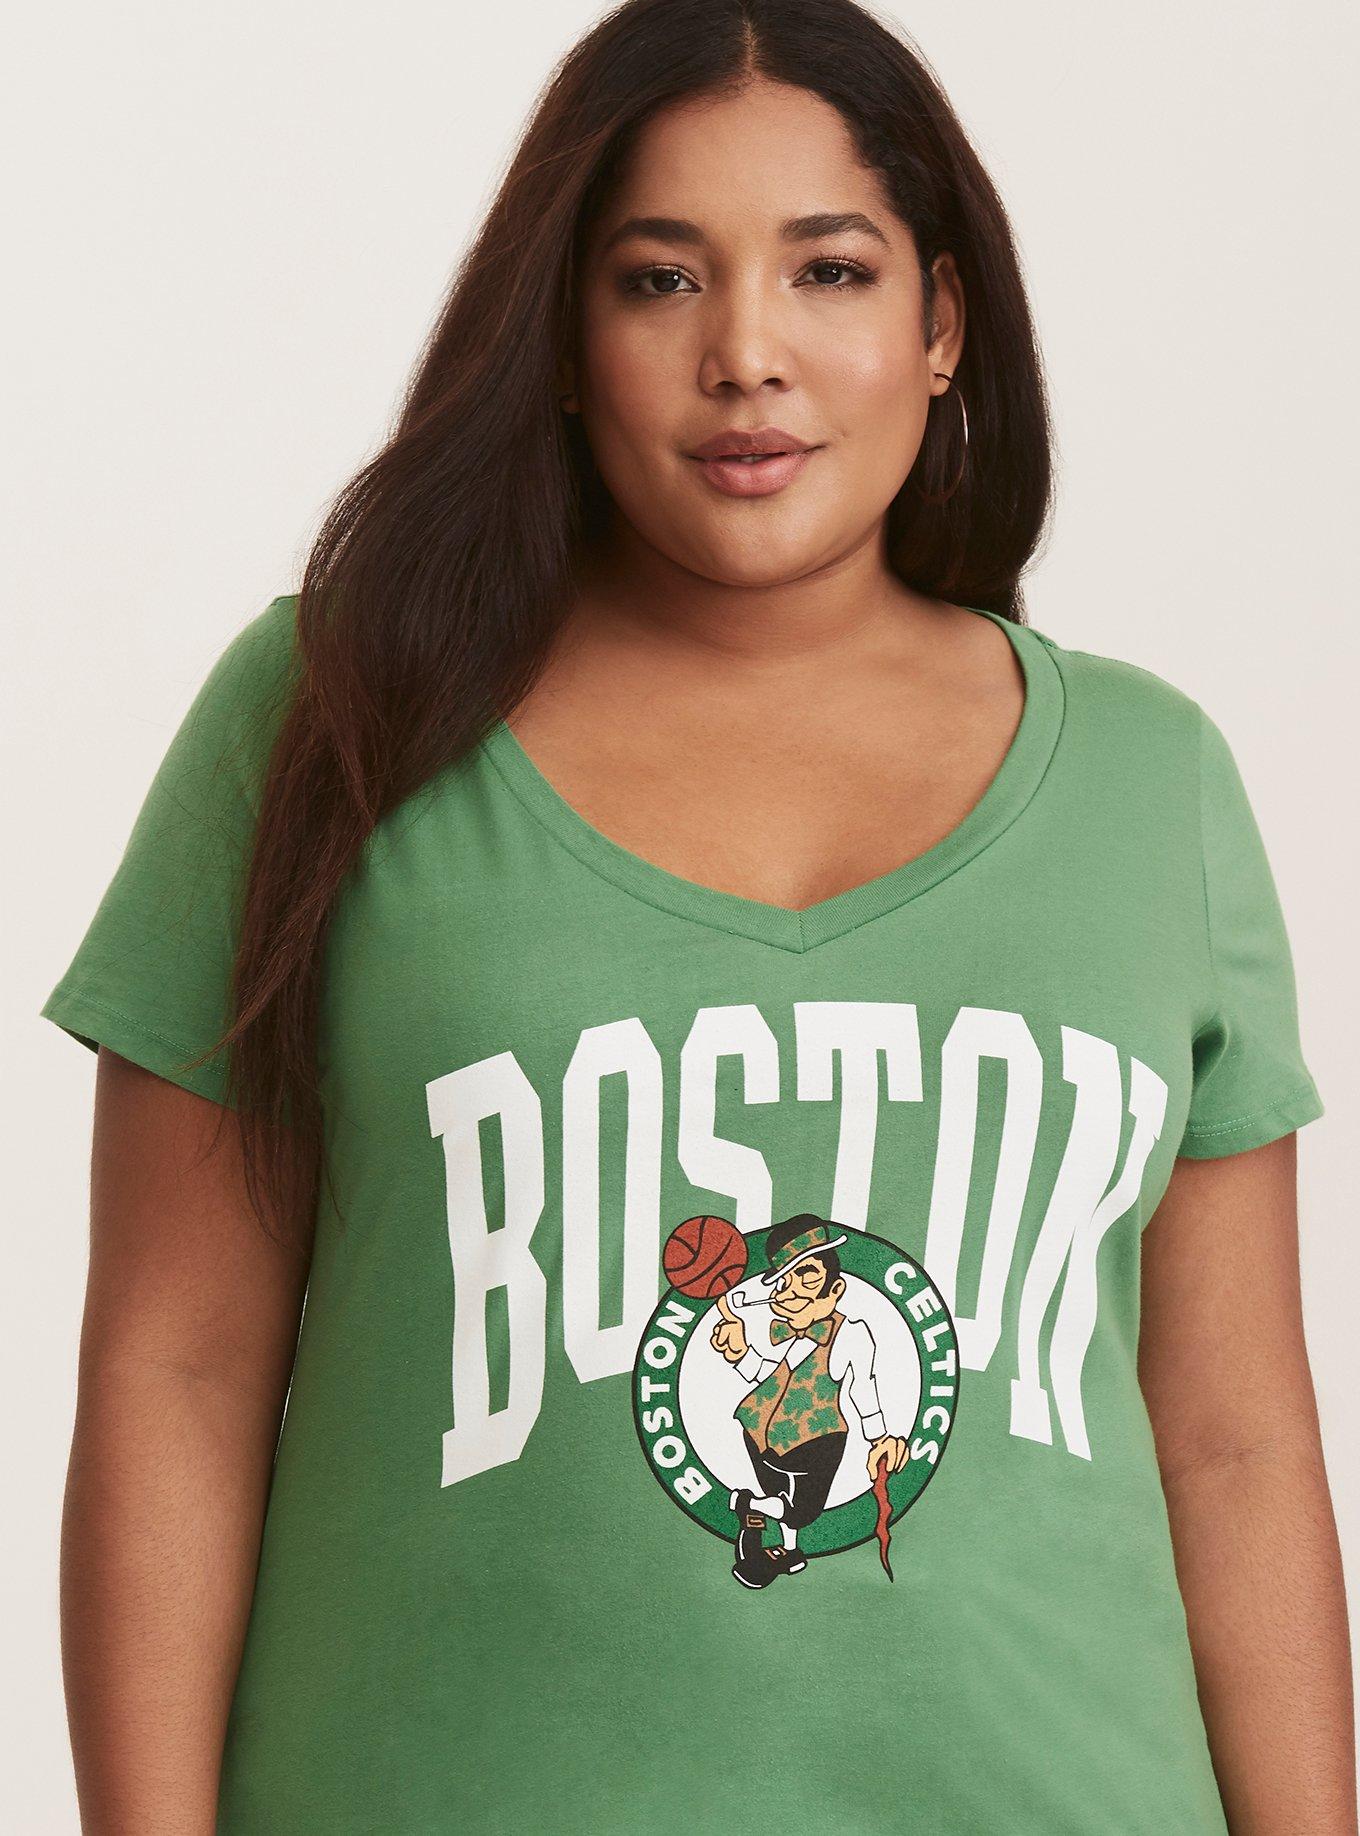 Torrid Plus Size Women's Clothing for sale in Boston